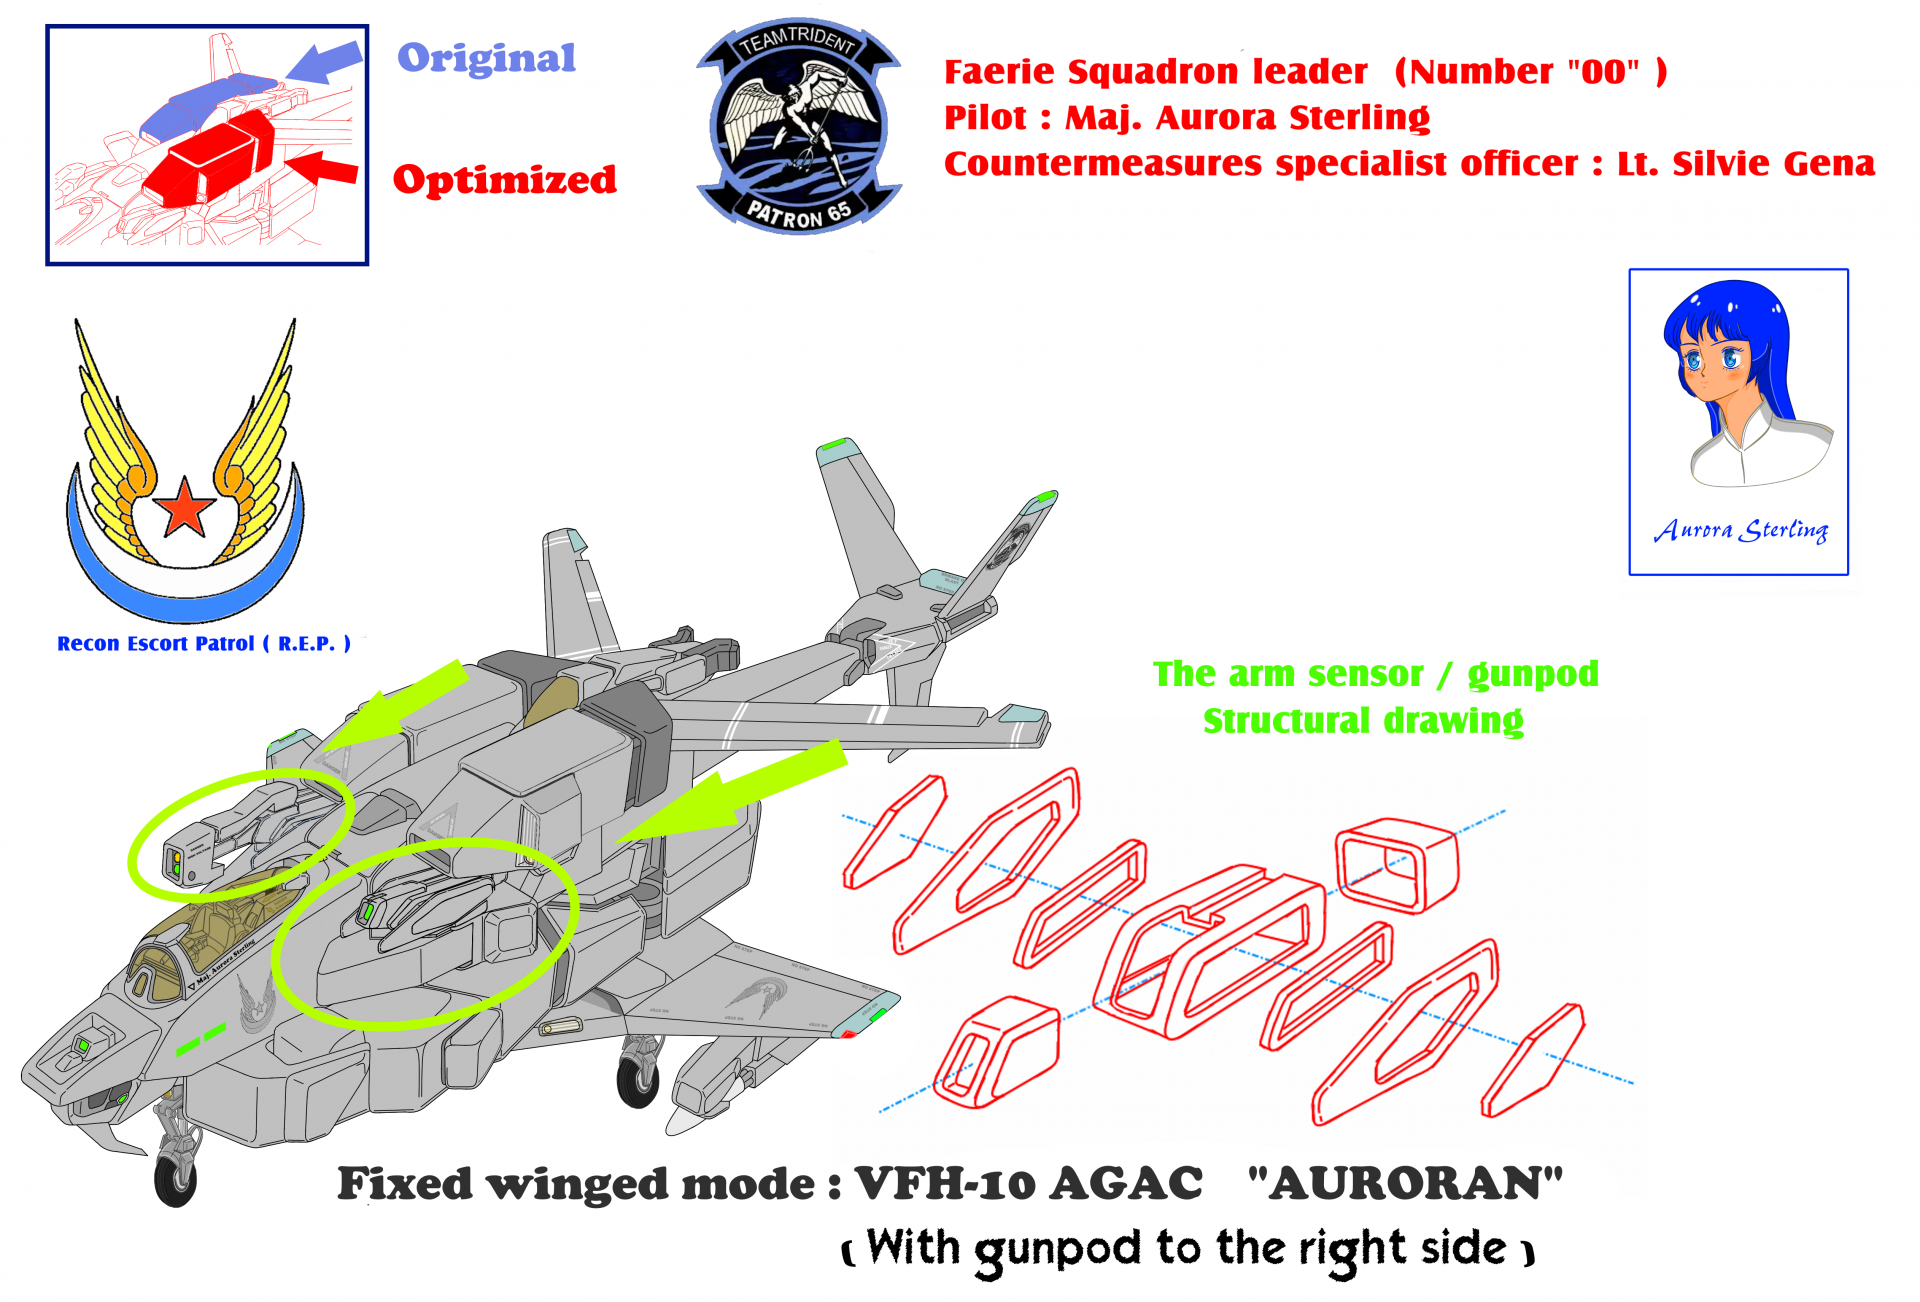 Sensor_pod_structural_drawing_VFH-10_Auroran_AGAC_by_yui1107.thumb.png.78f376dc16cda145aea102451cbbb739.png